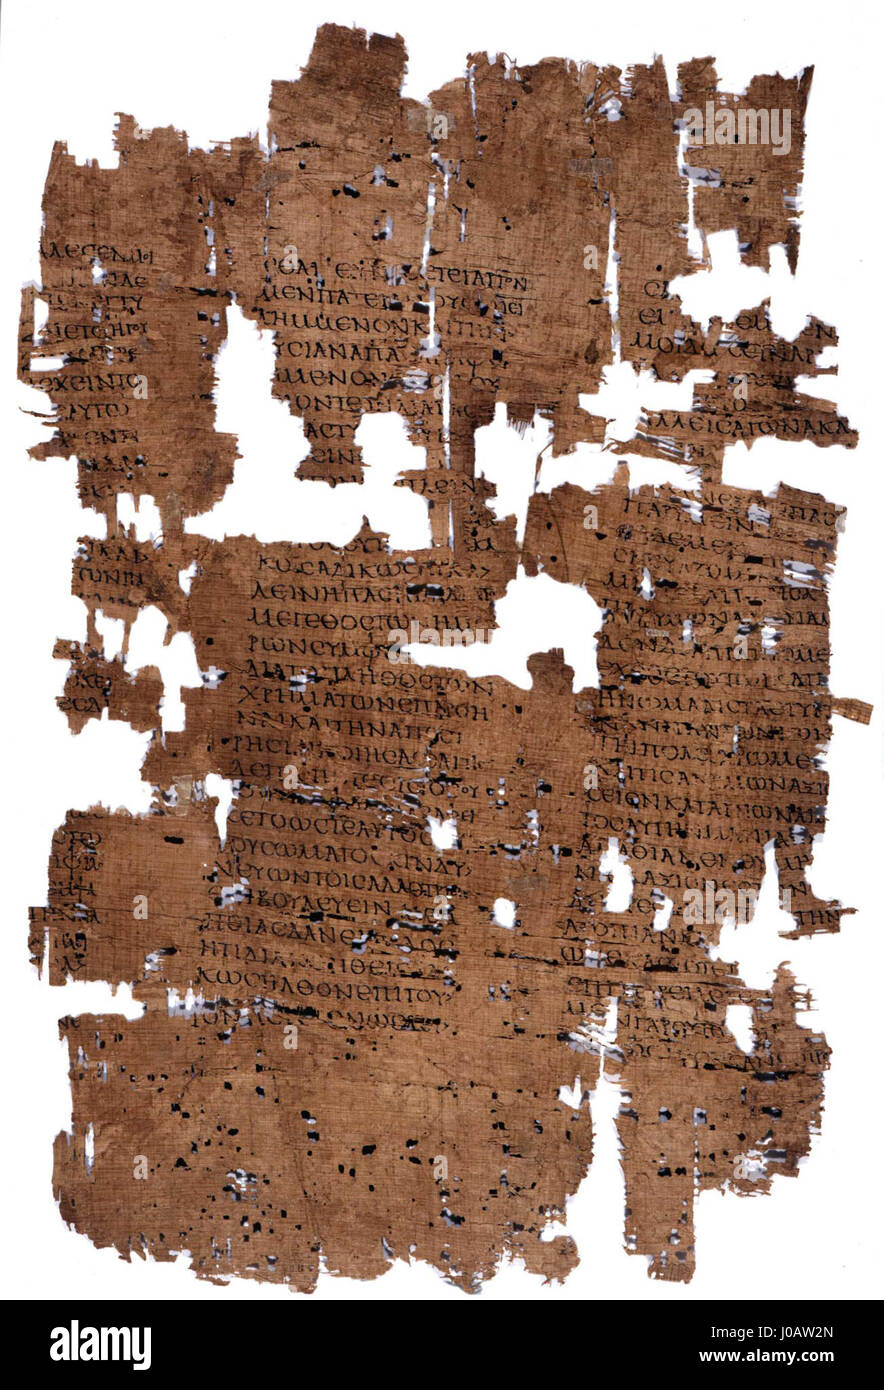 Papyrus Oxyrhynchus 1183 - Princeton University Library, AM 4097 - Isocrates, Trapeziticus 44E2809348 Stock Photo